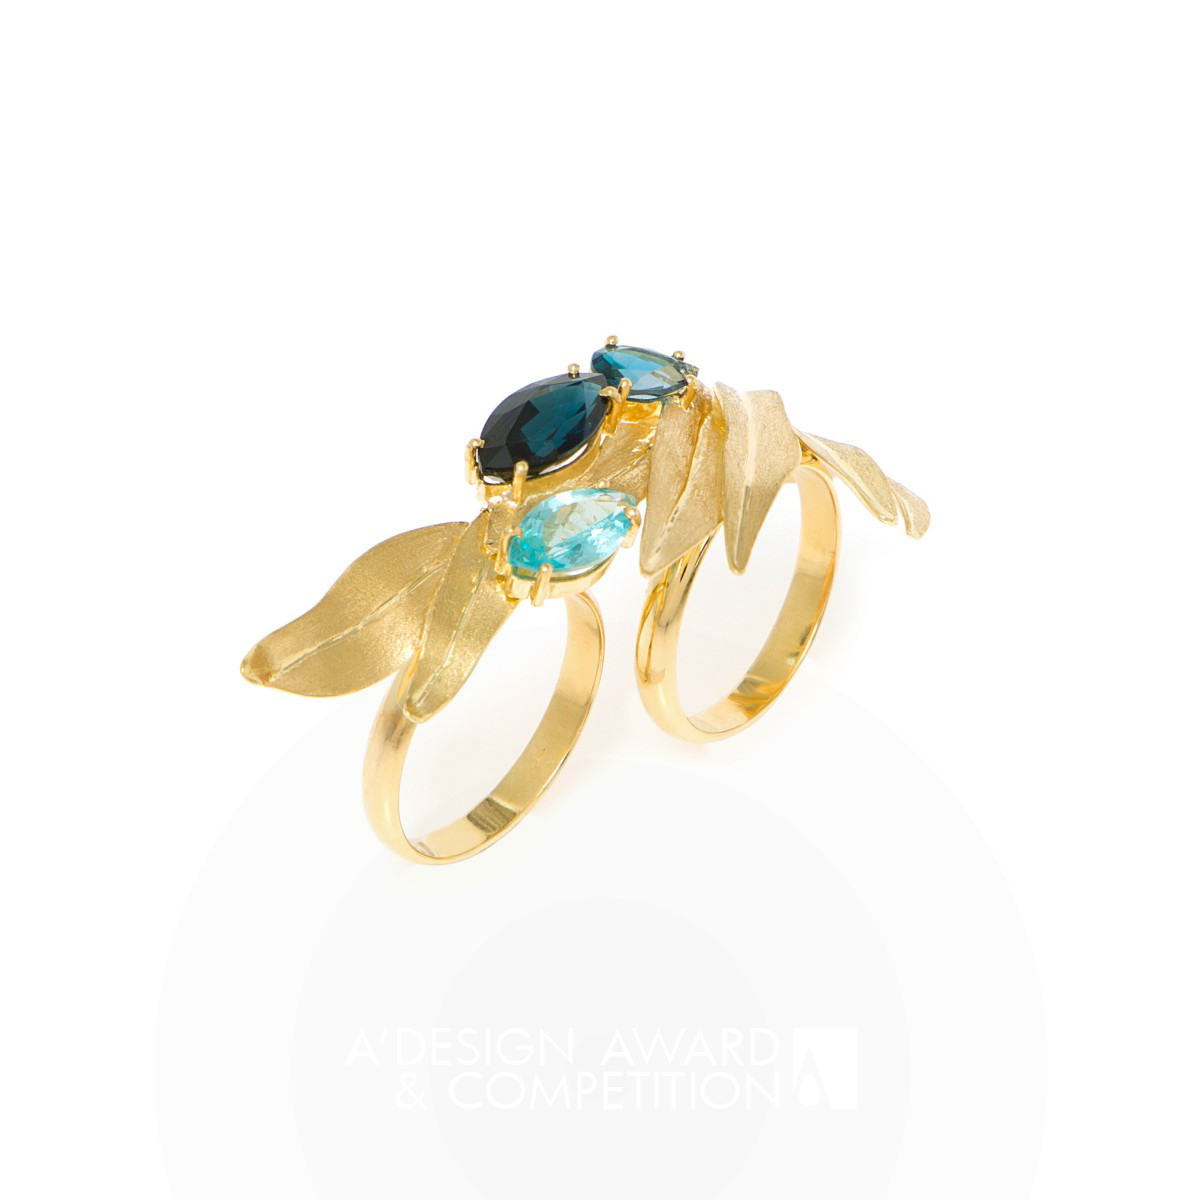 Larissa Moraes wins Iron at the prestigious A' Jewelry Design Award with Irises Ring.